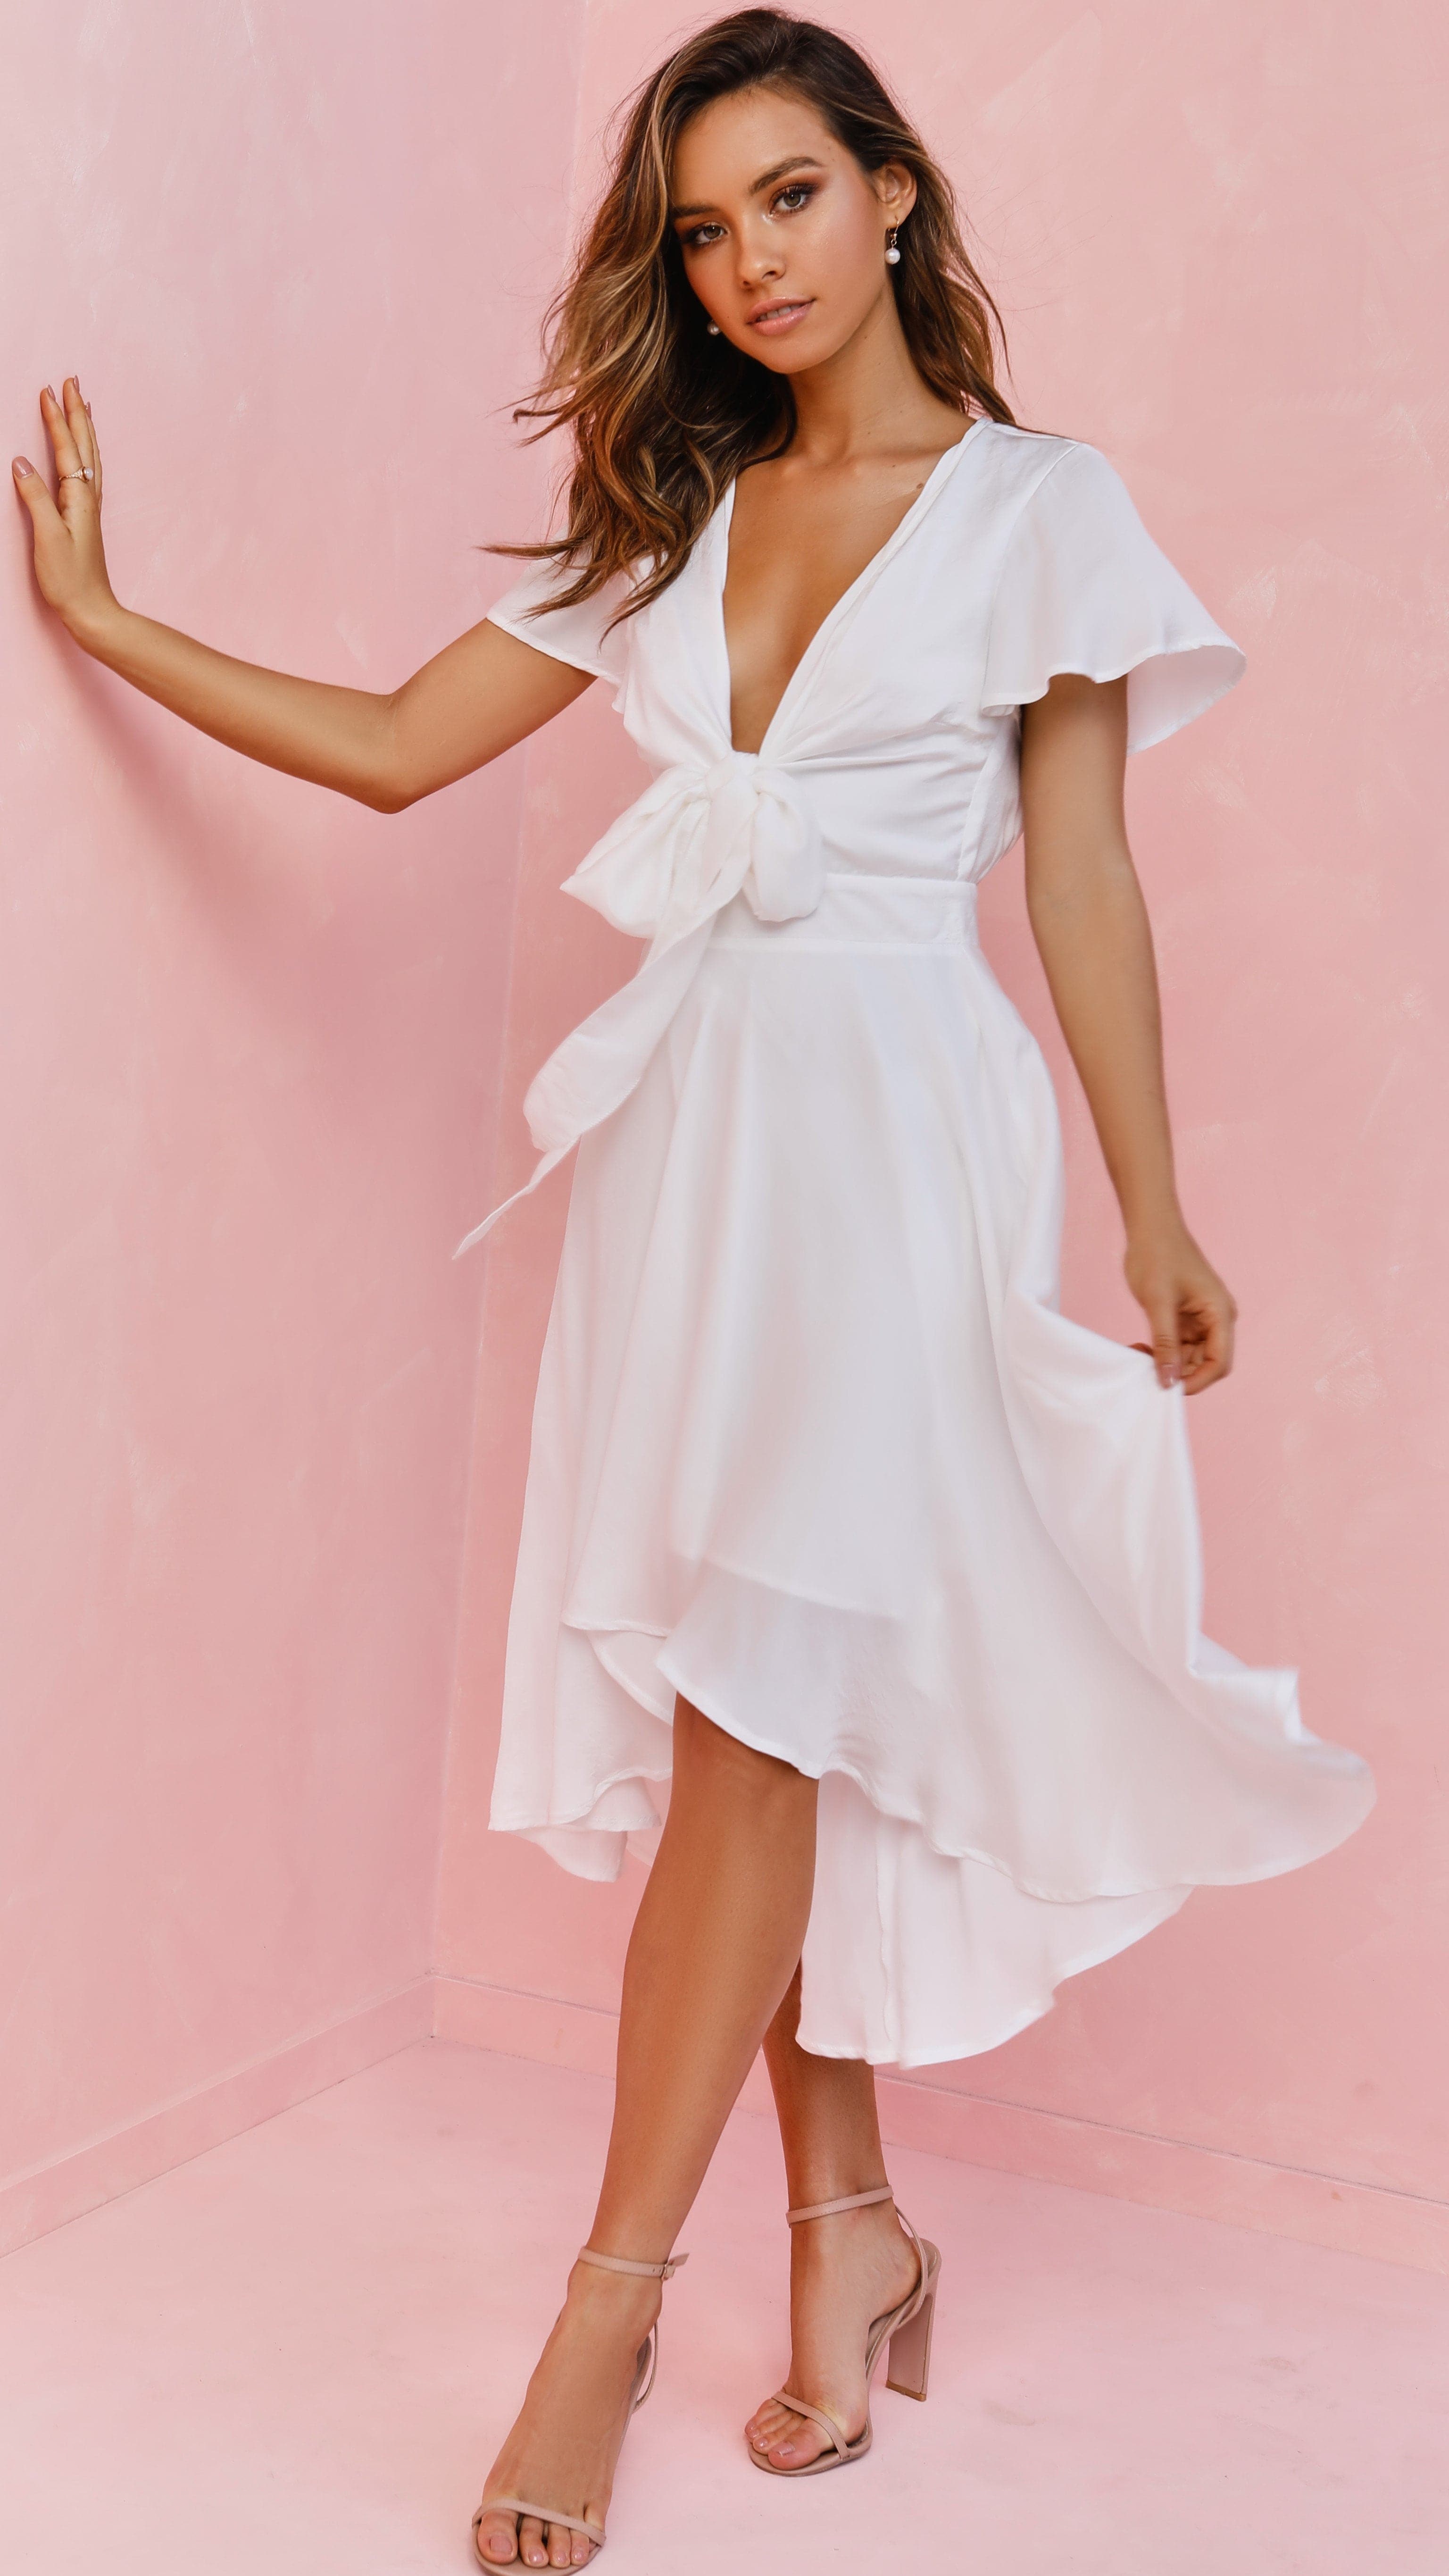 Sunny Daze Dress - White